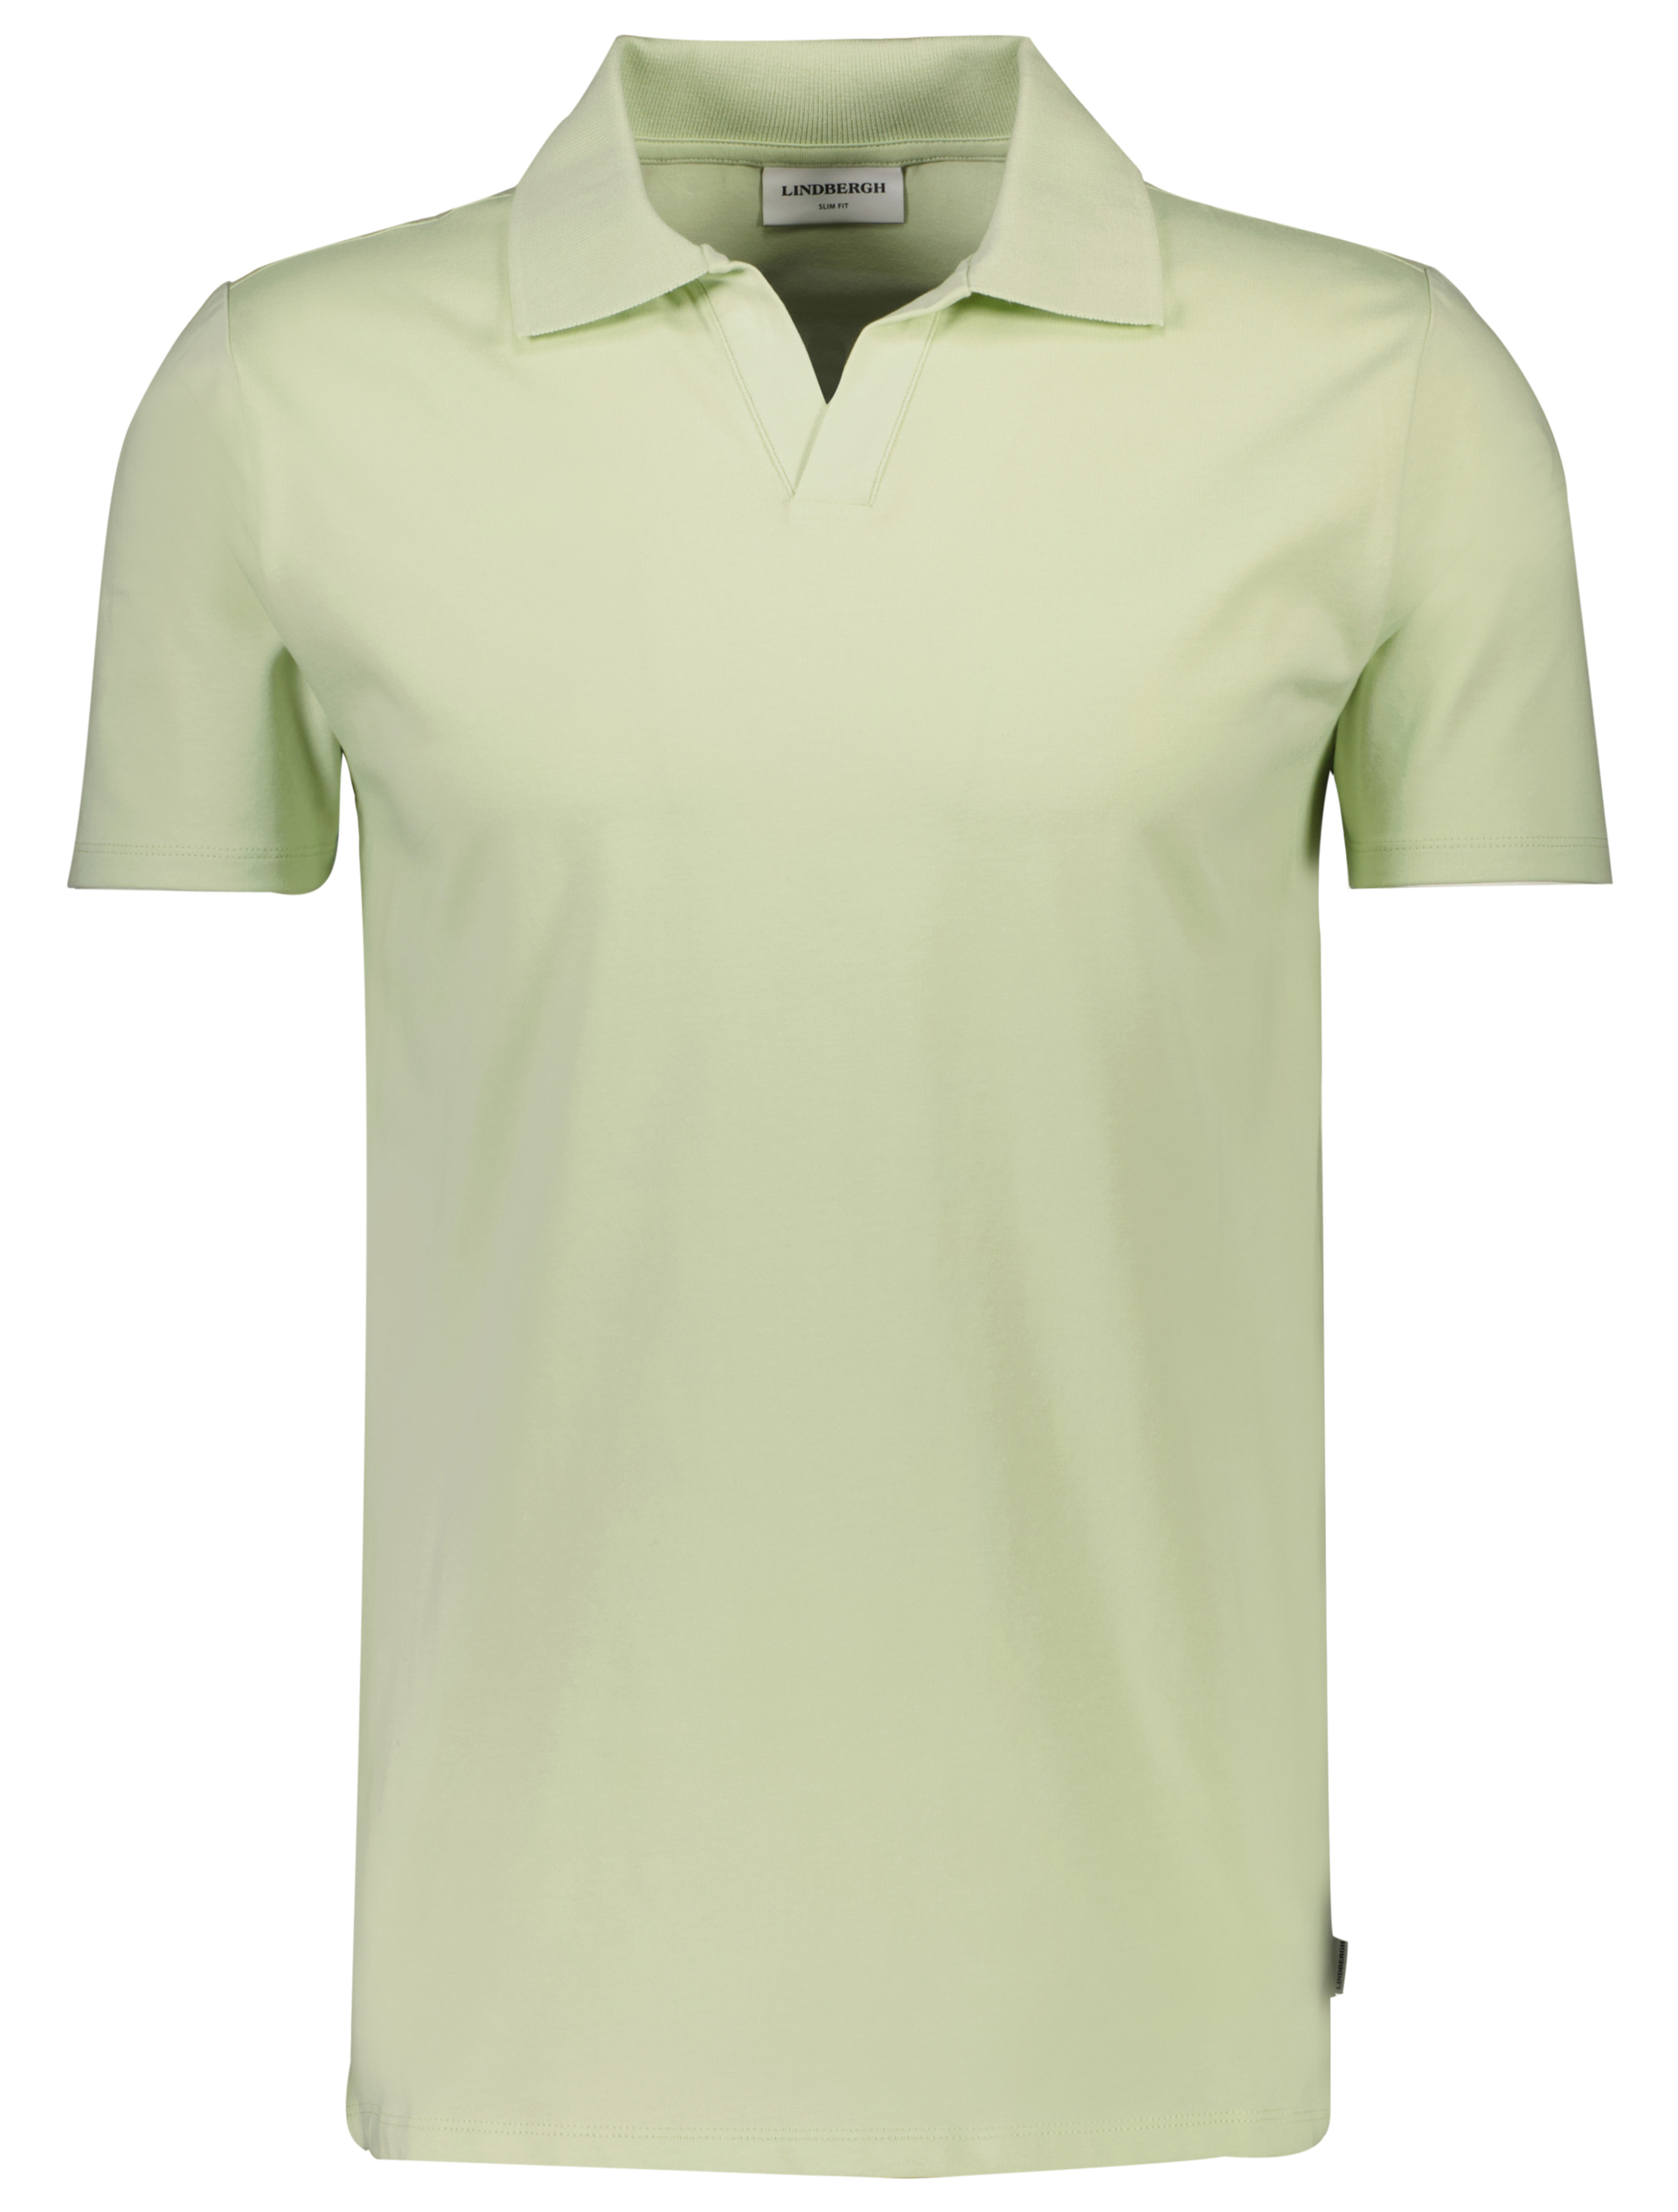 Lindbergh Polo shirt green / mint